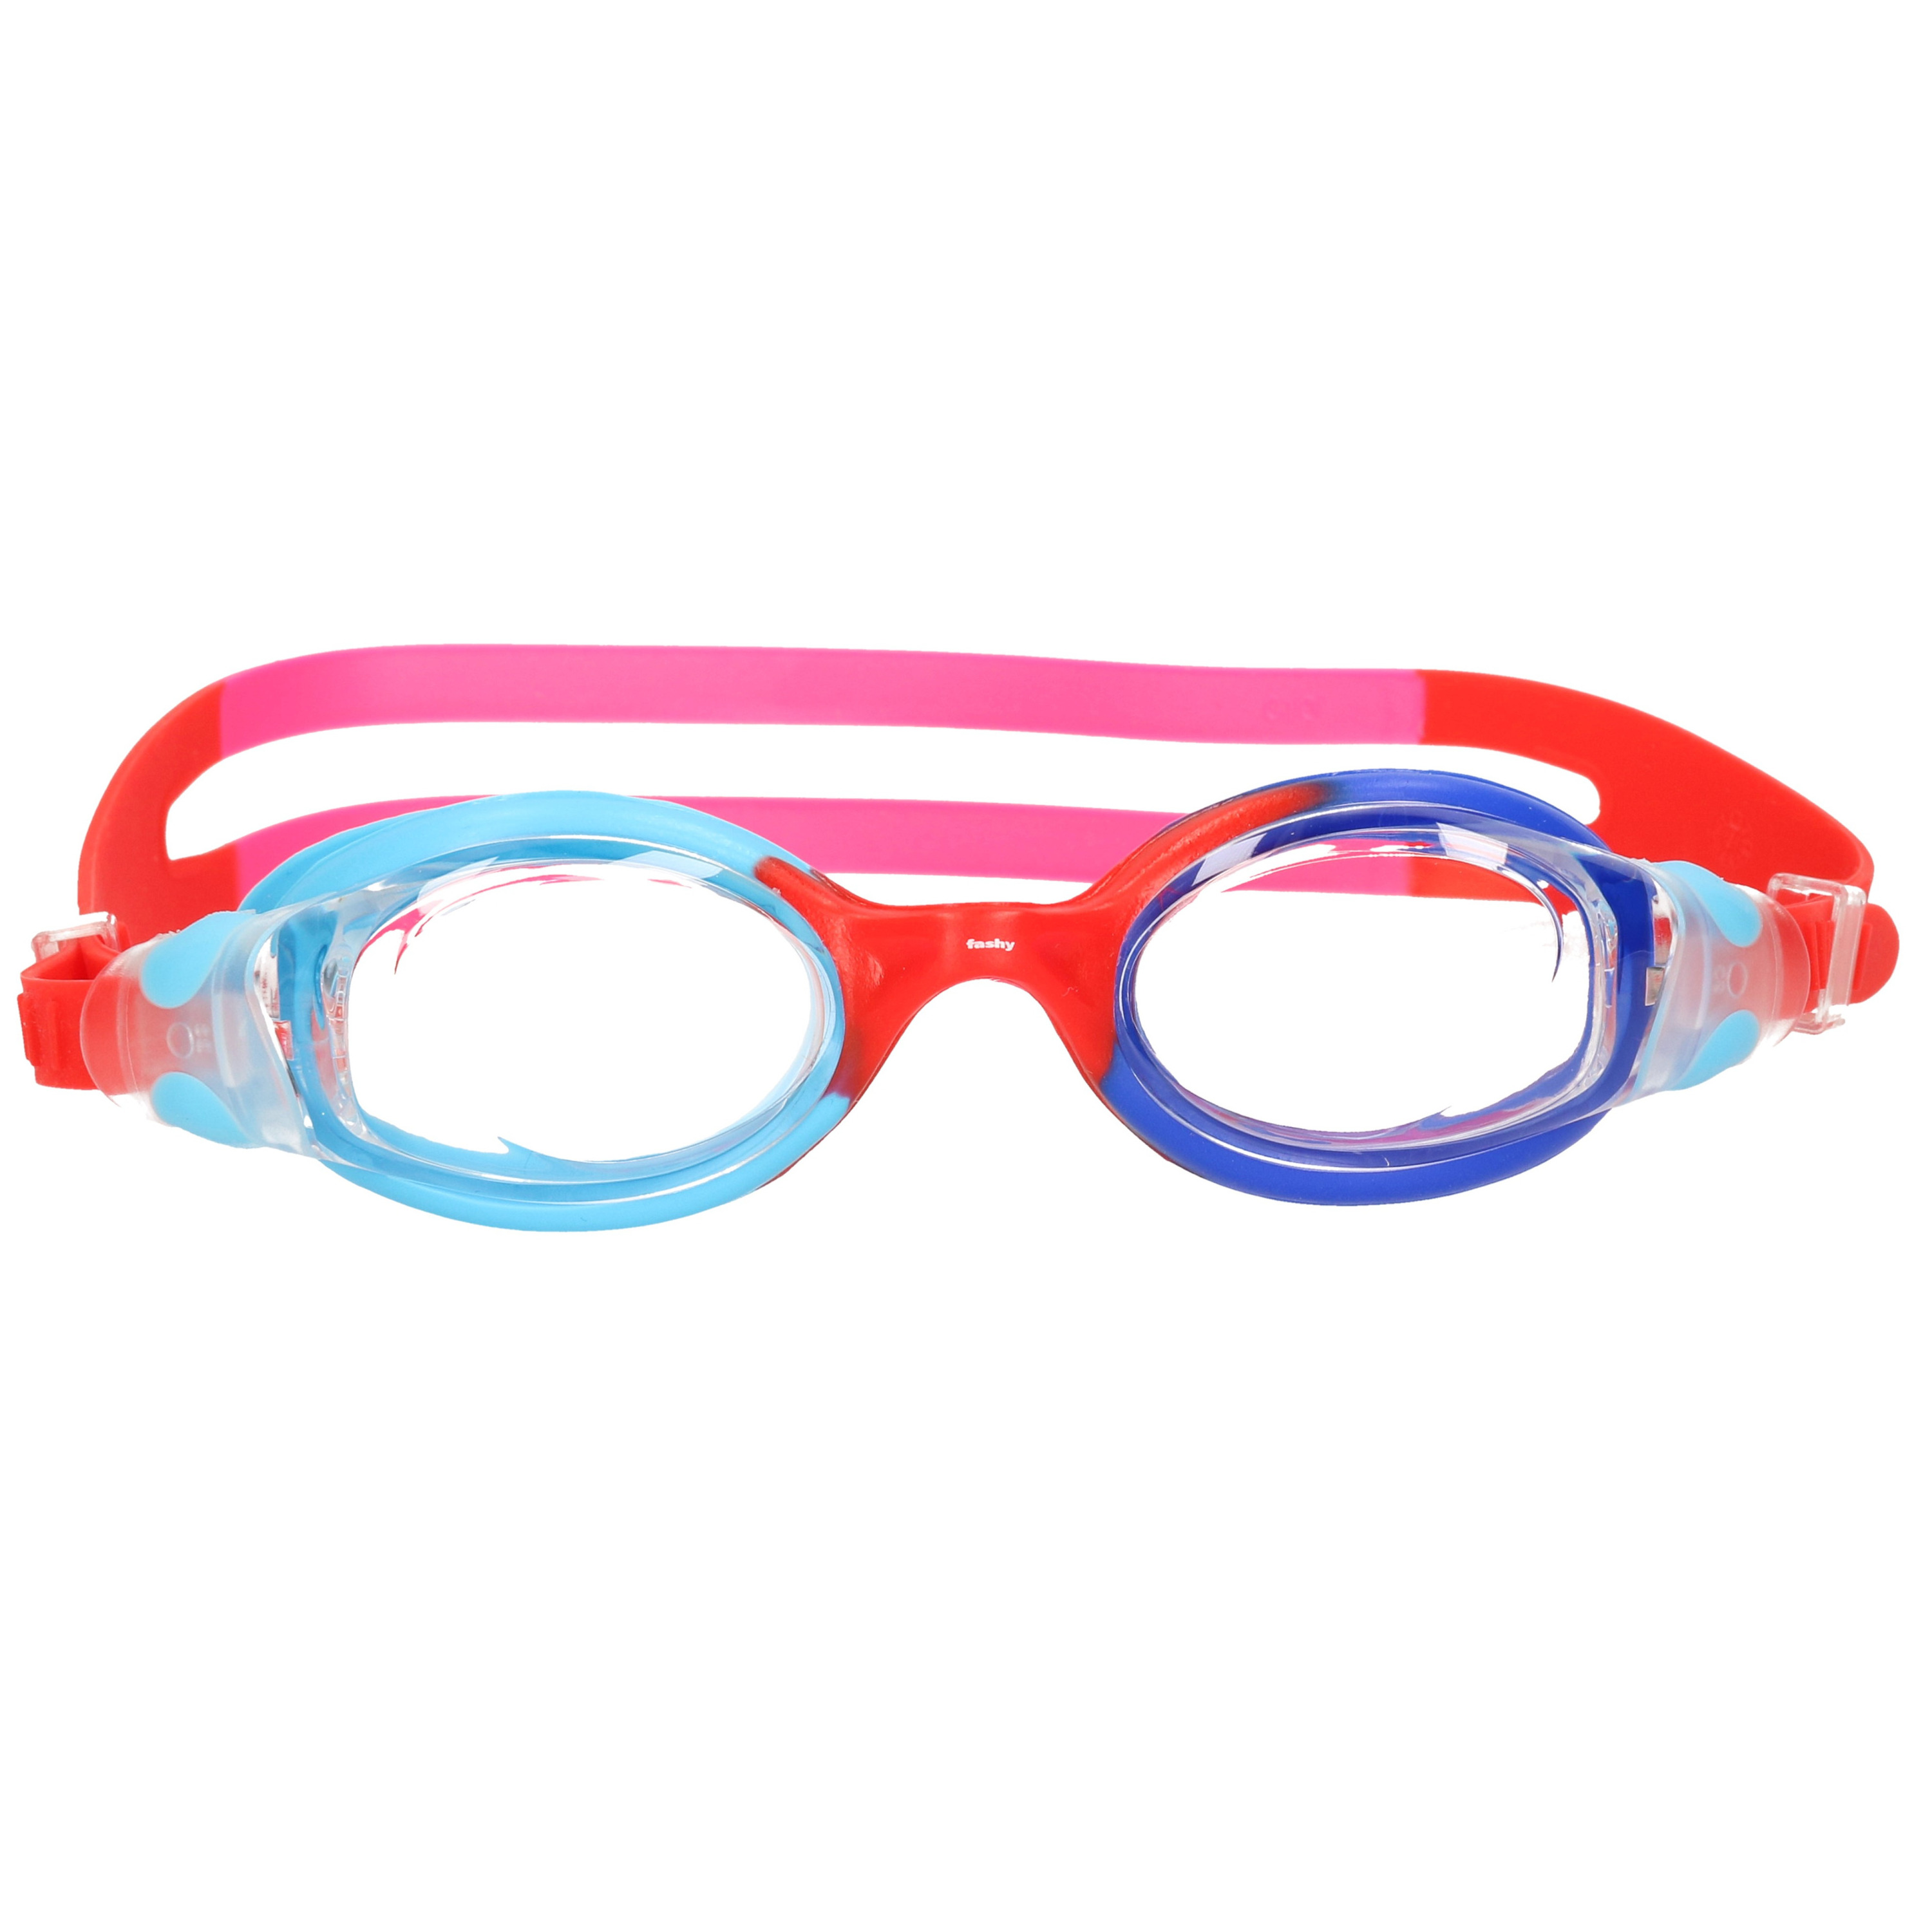 Gekleurde kinder zwembril 4-7 jaar rood-roze-blauw in opbergdoosje